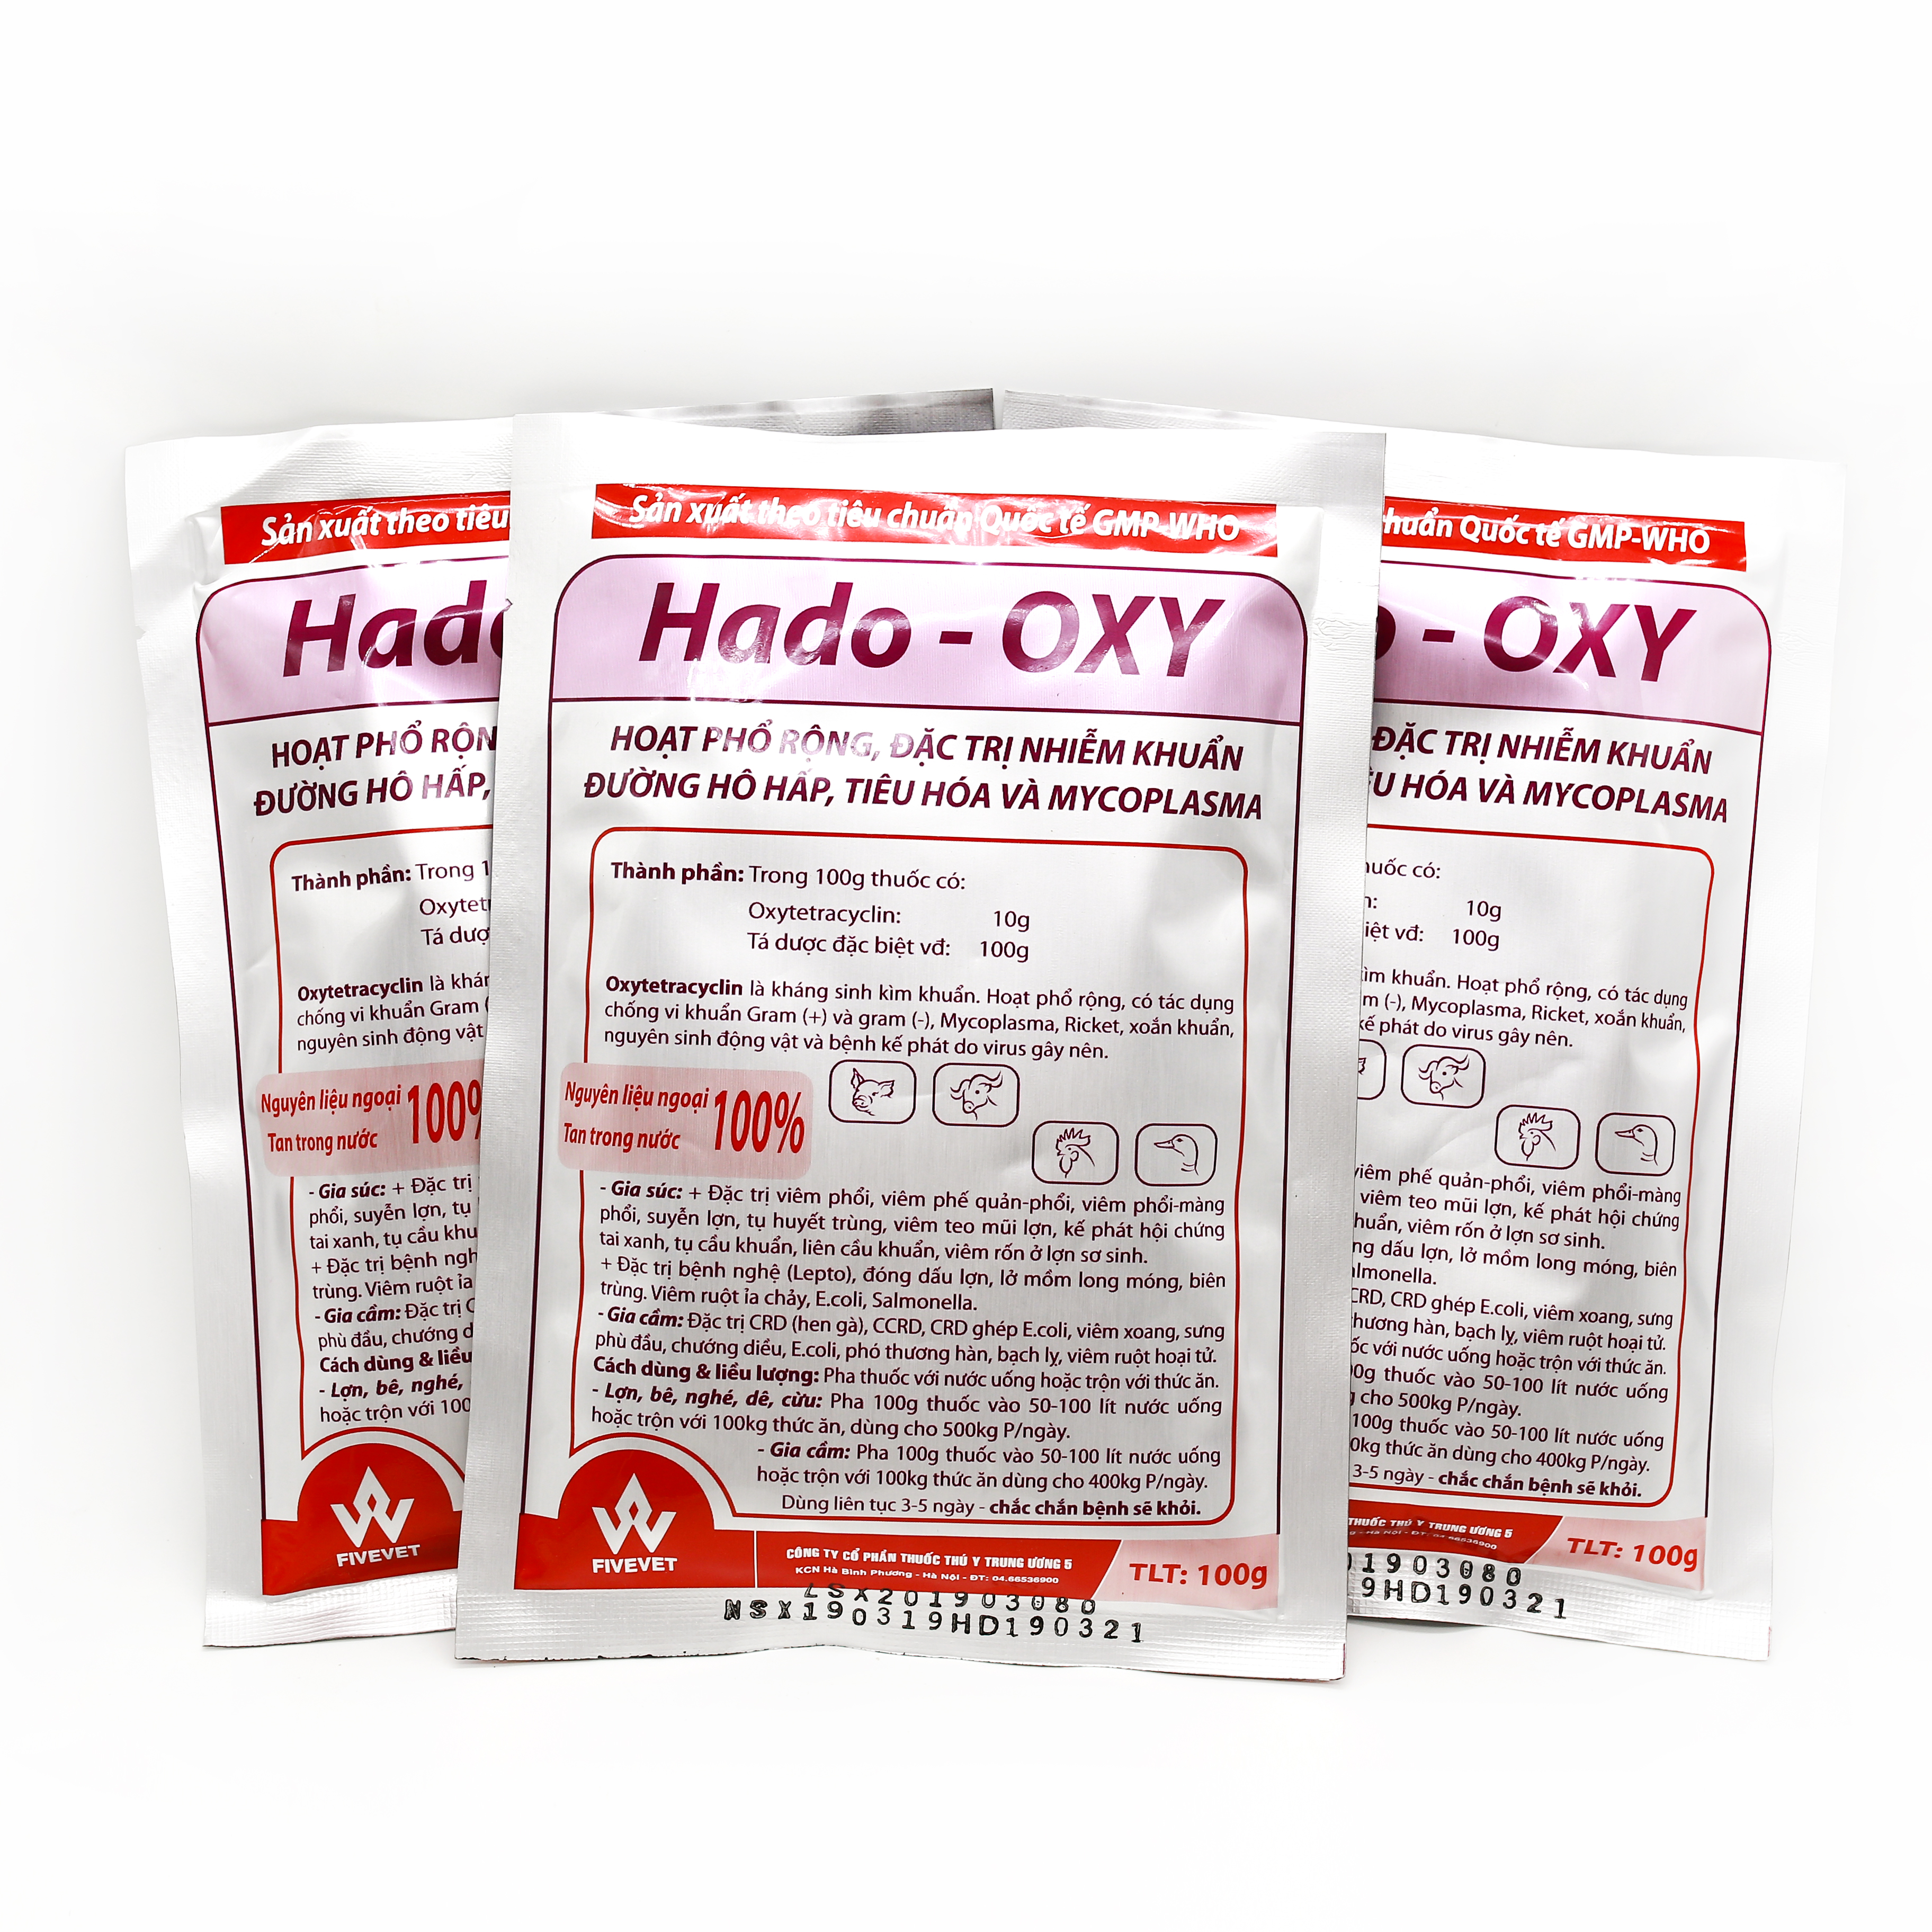 Hado-Oxy